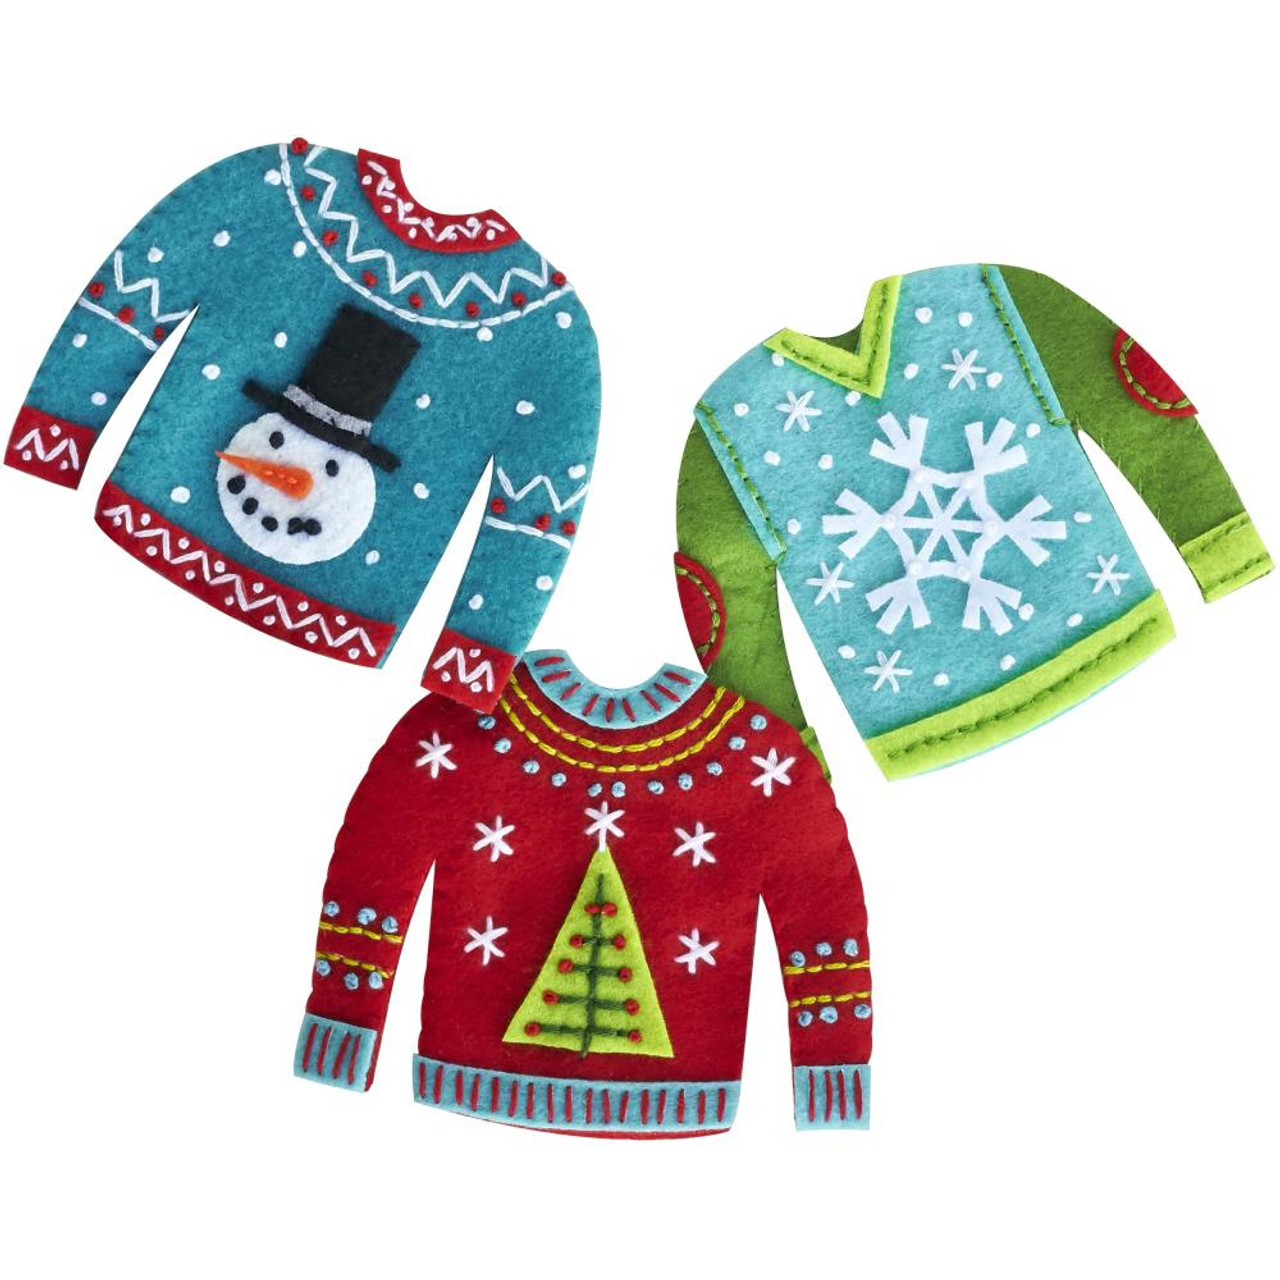 Bucilla Felt Ornaments Applique Kit Set of 6 - Ugly Sweater